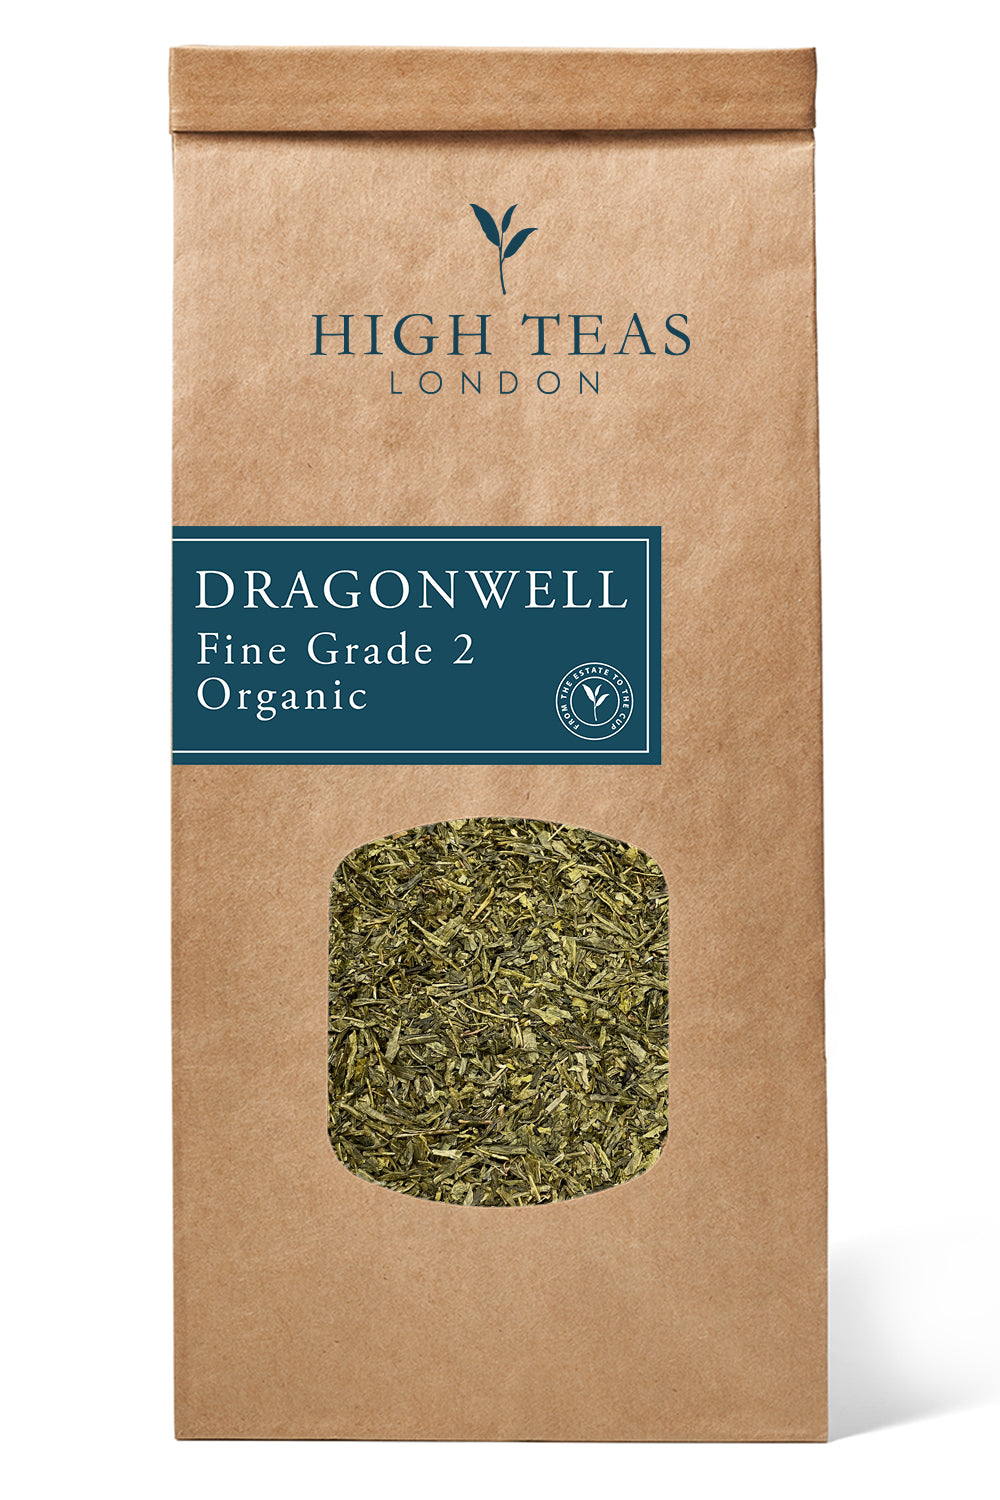 Dragonwell Lung Jing - Fine Grade 2 Organic-250g-Loose Leaf Tea-High Teas